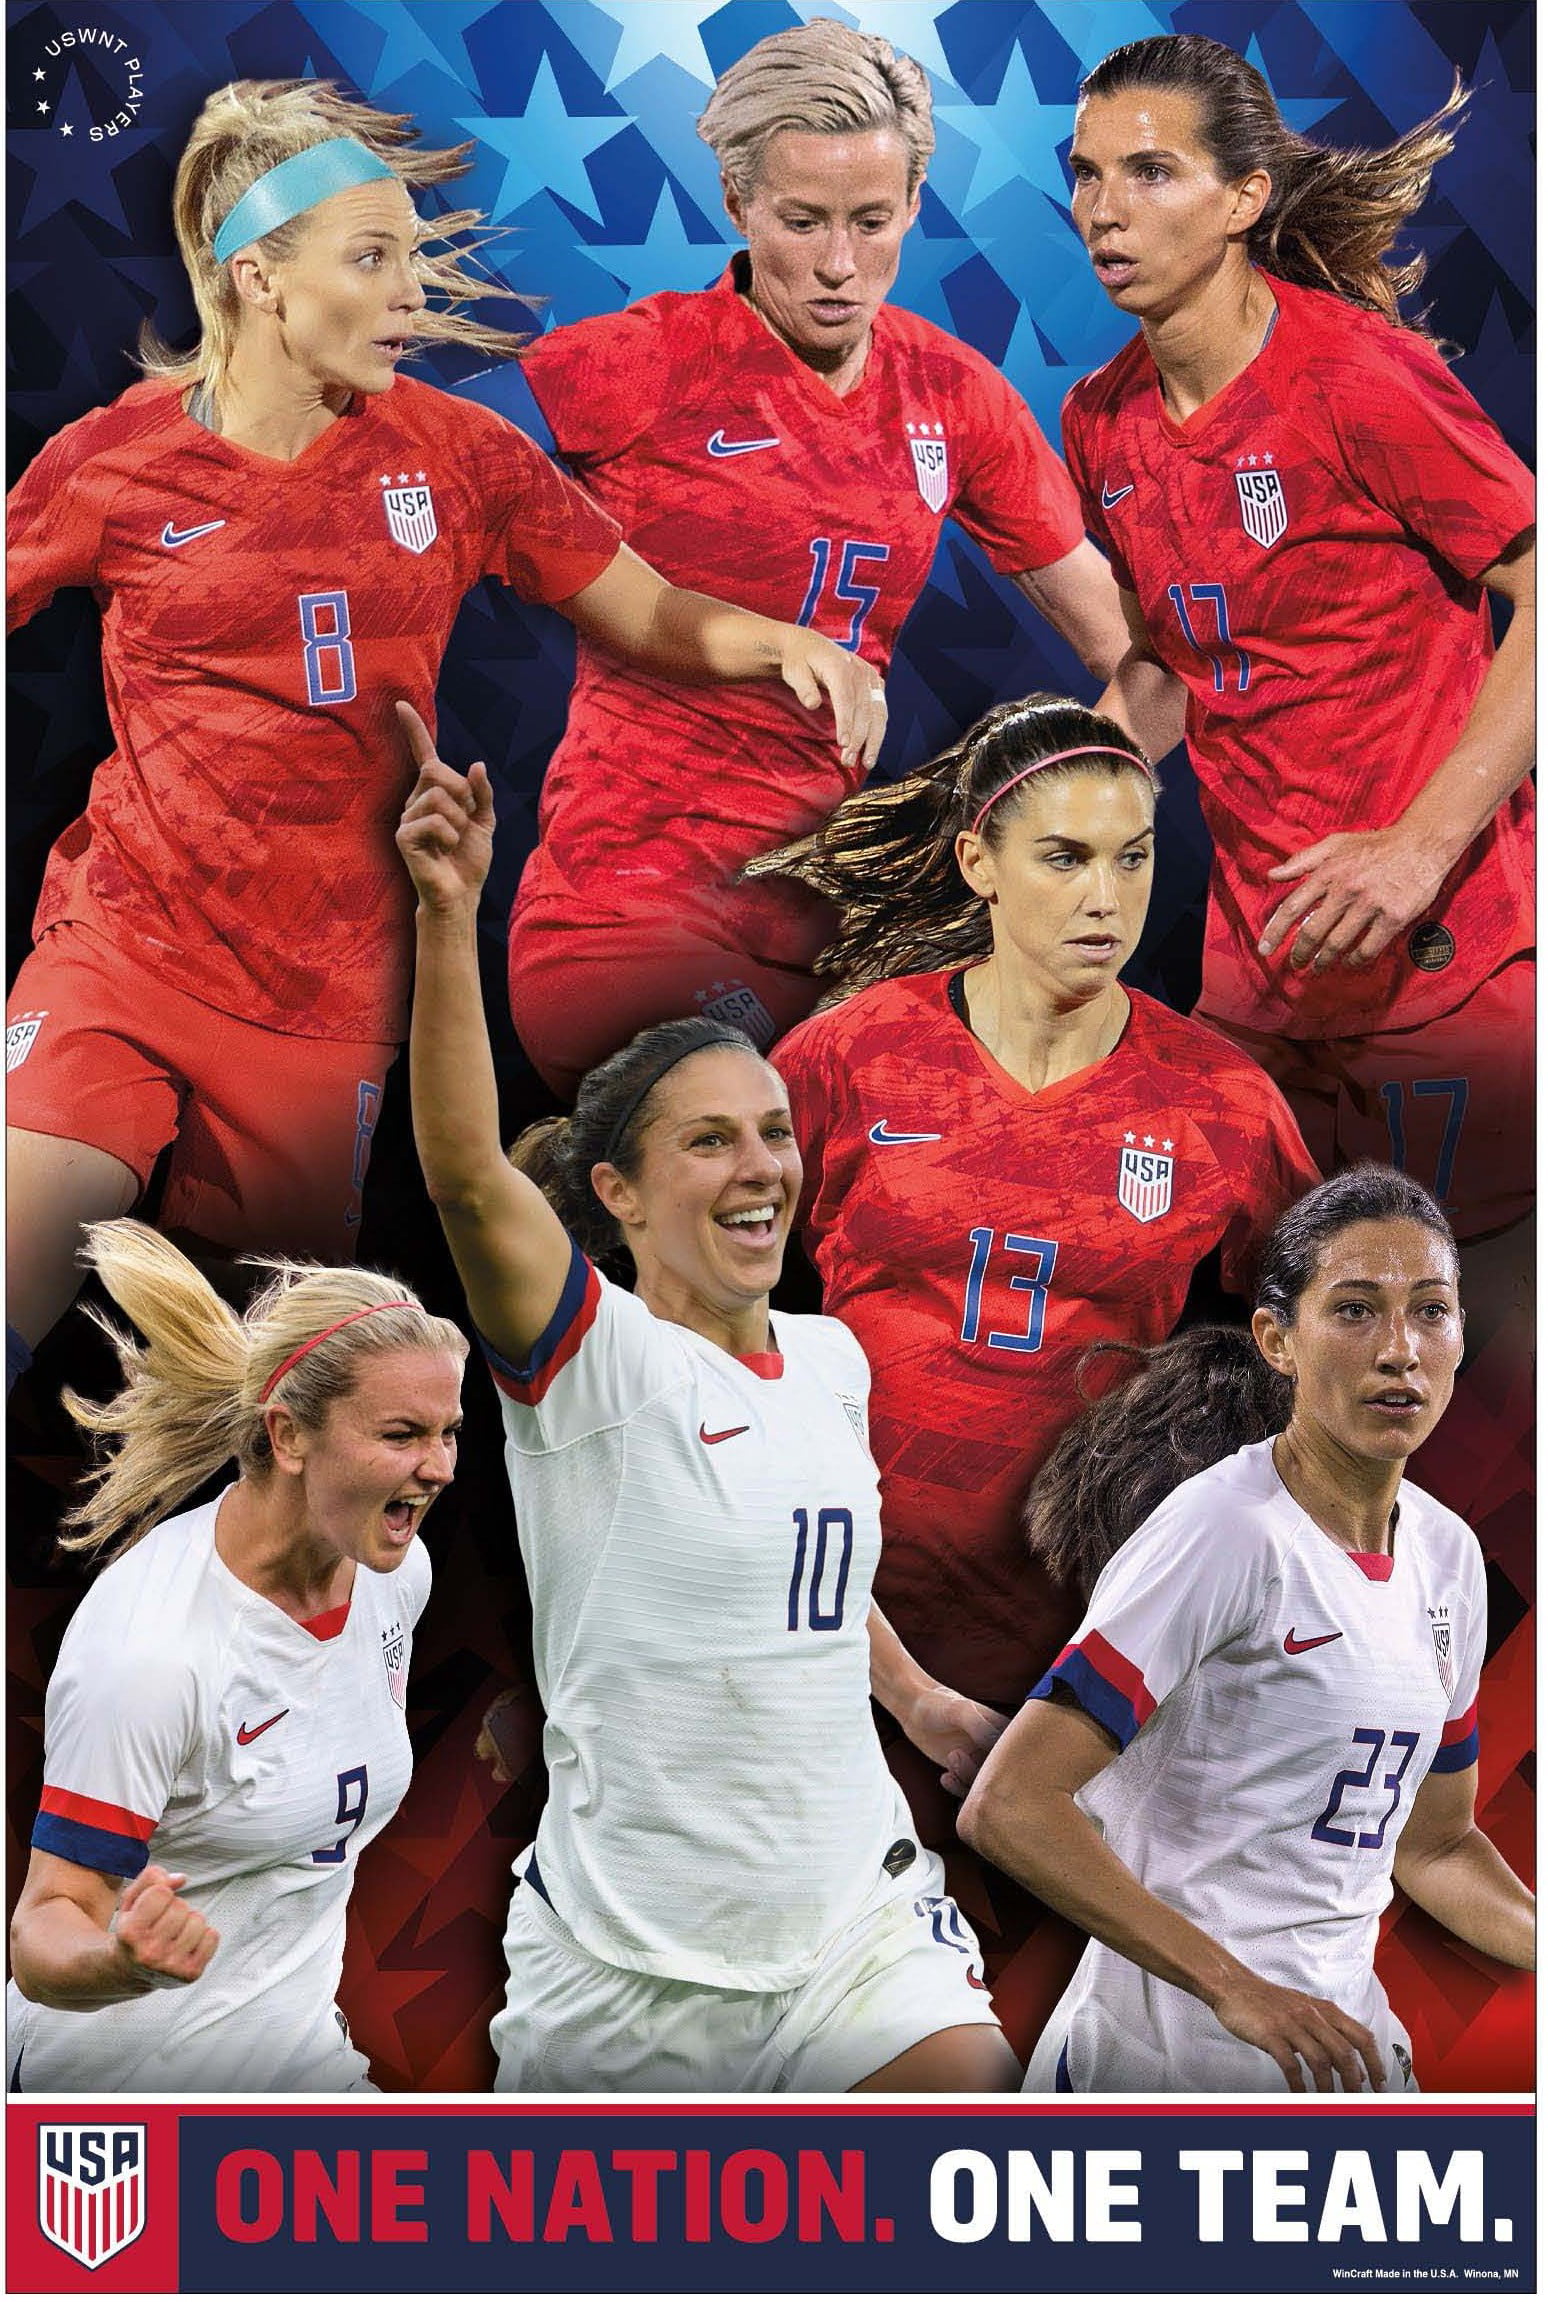 Us Women's Soccer Team Roster 2019 / U.S. Women's Soccer: Equal-Pay